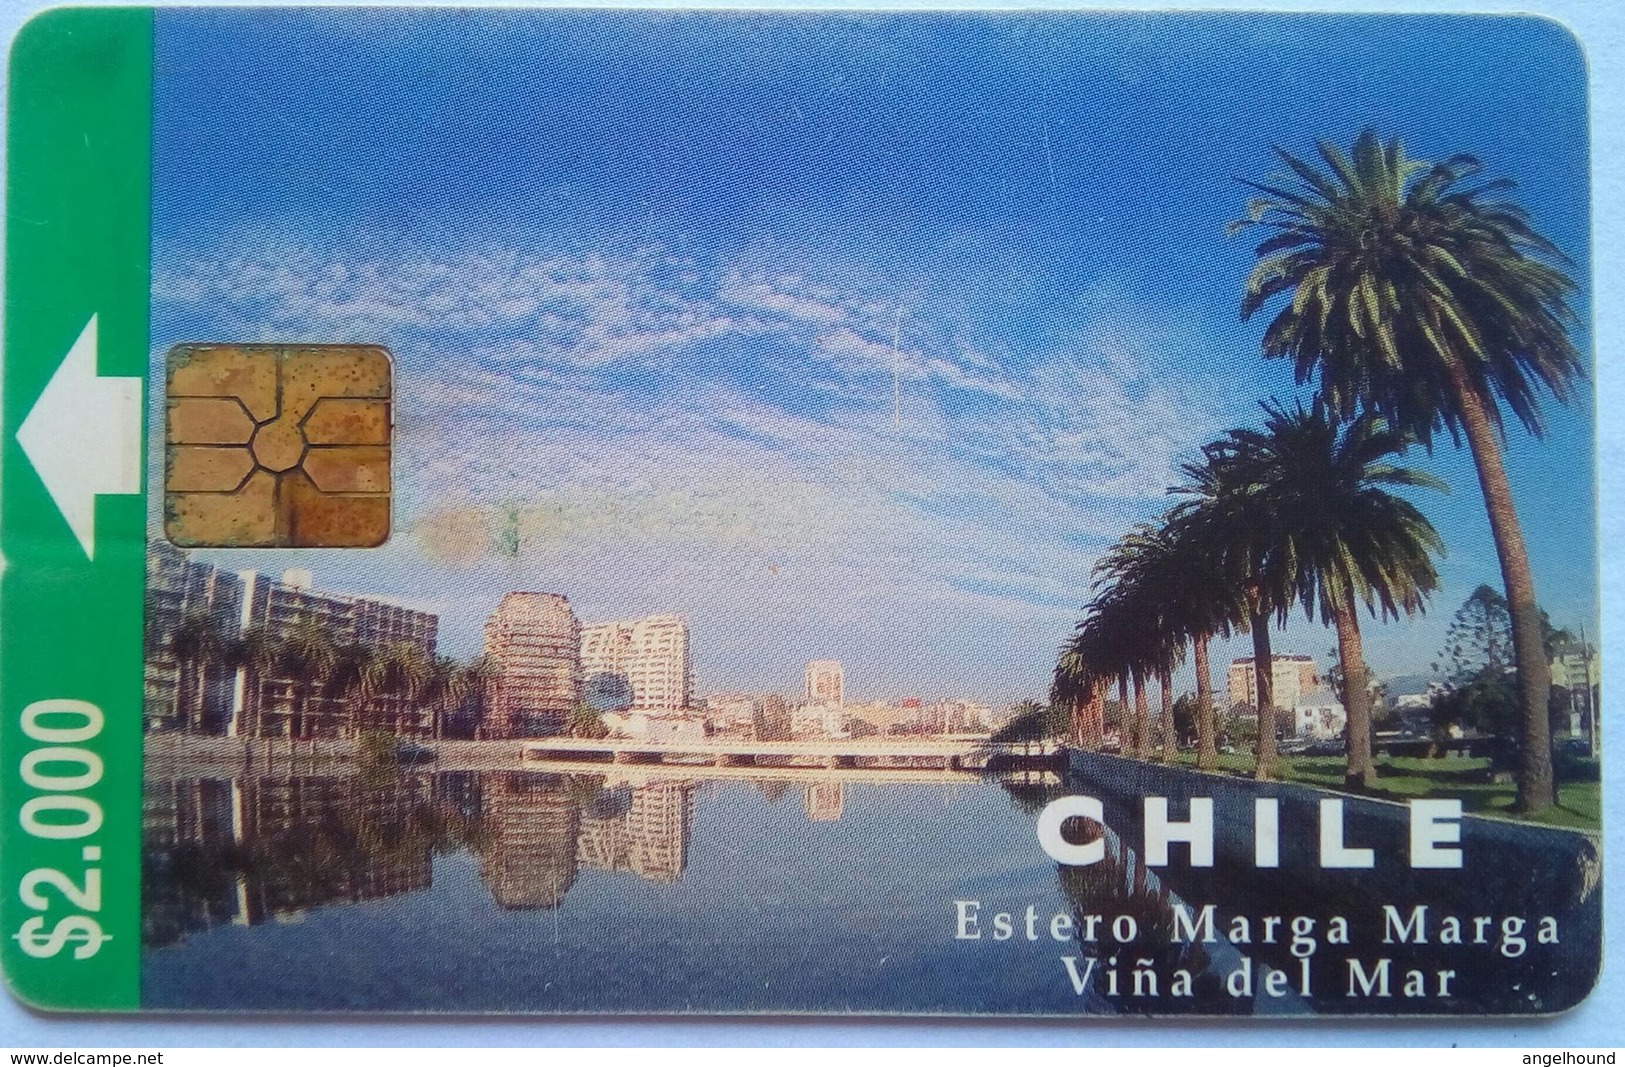 Chile Estero Marga Marga $2,000 - Chili